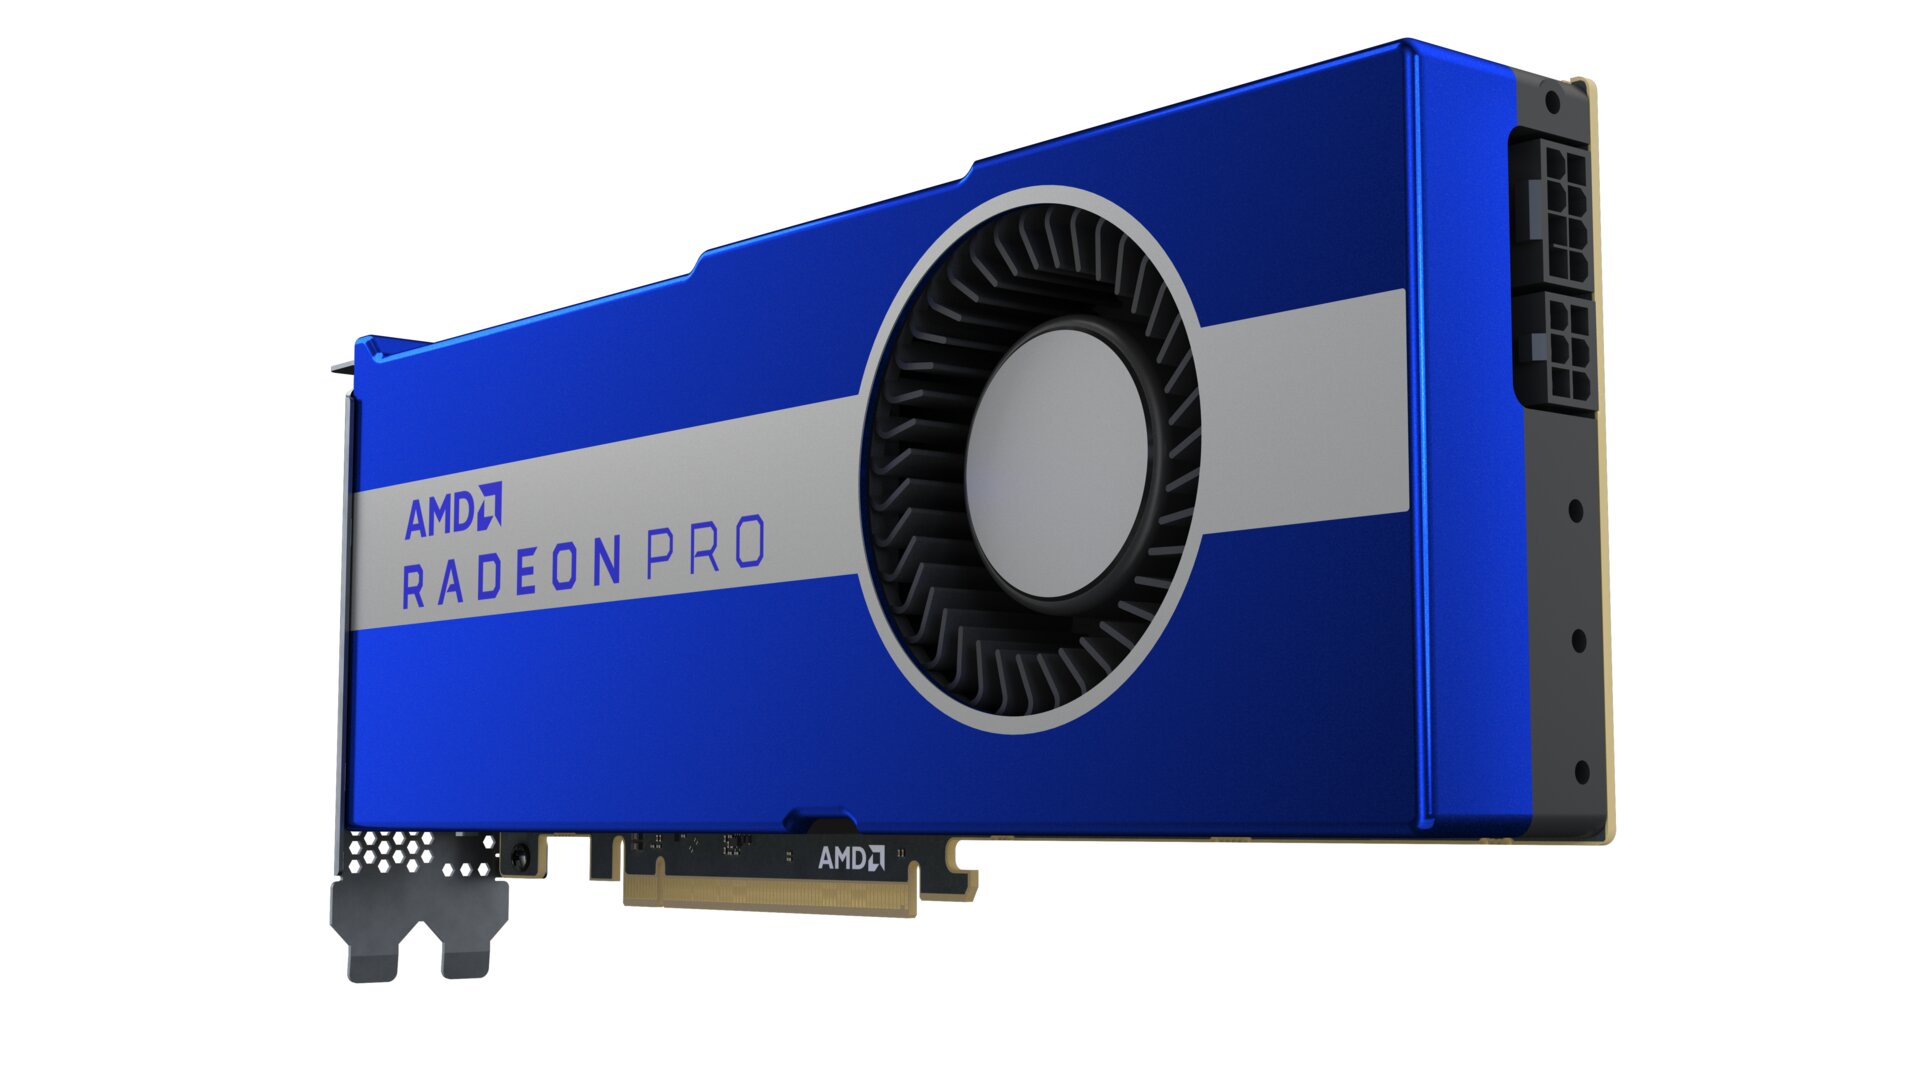 amd radeon pro vii 4 AMD เพิ่มประสิทธิภาพการทำงานแบบมืออาชีพด้วยกราฟิกการ์ดเวิร์คสเตชั่น AMD Radeon Pro VII พร้อมด้วยการอัพเดตซอฟต์แวร์ AMD Radeon Pro Software